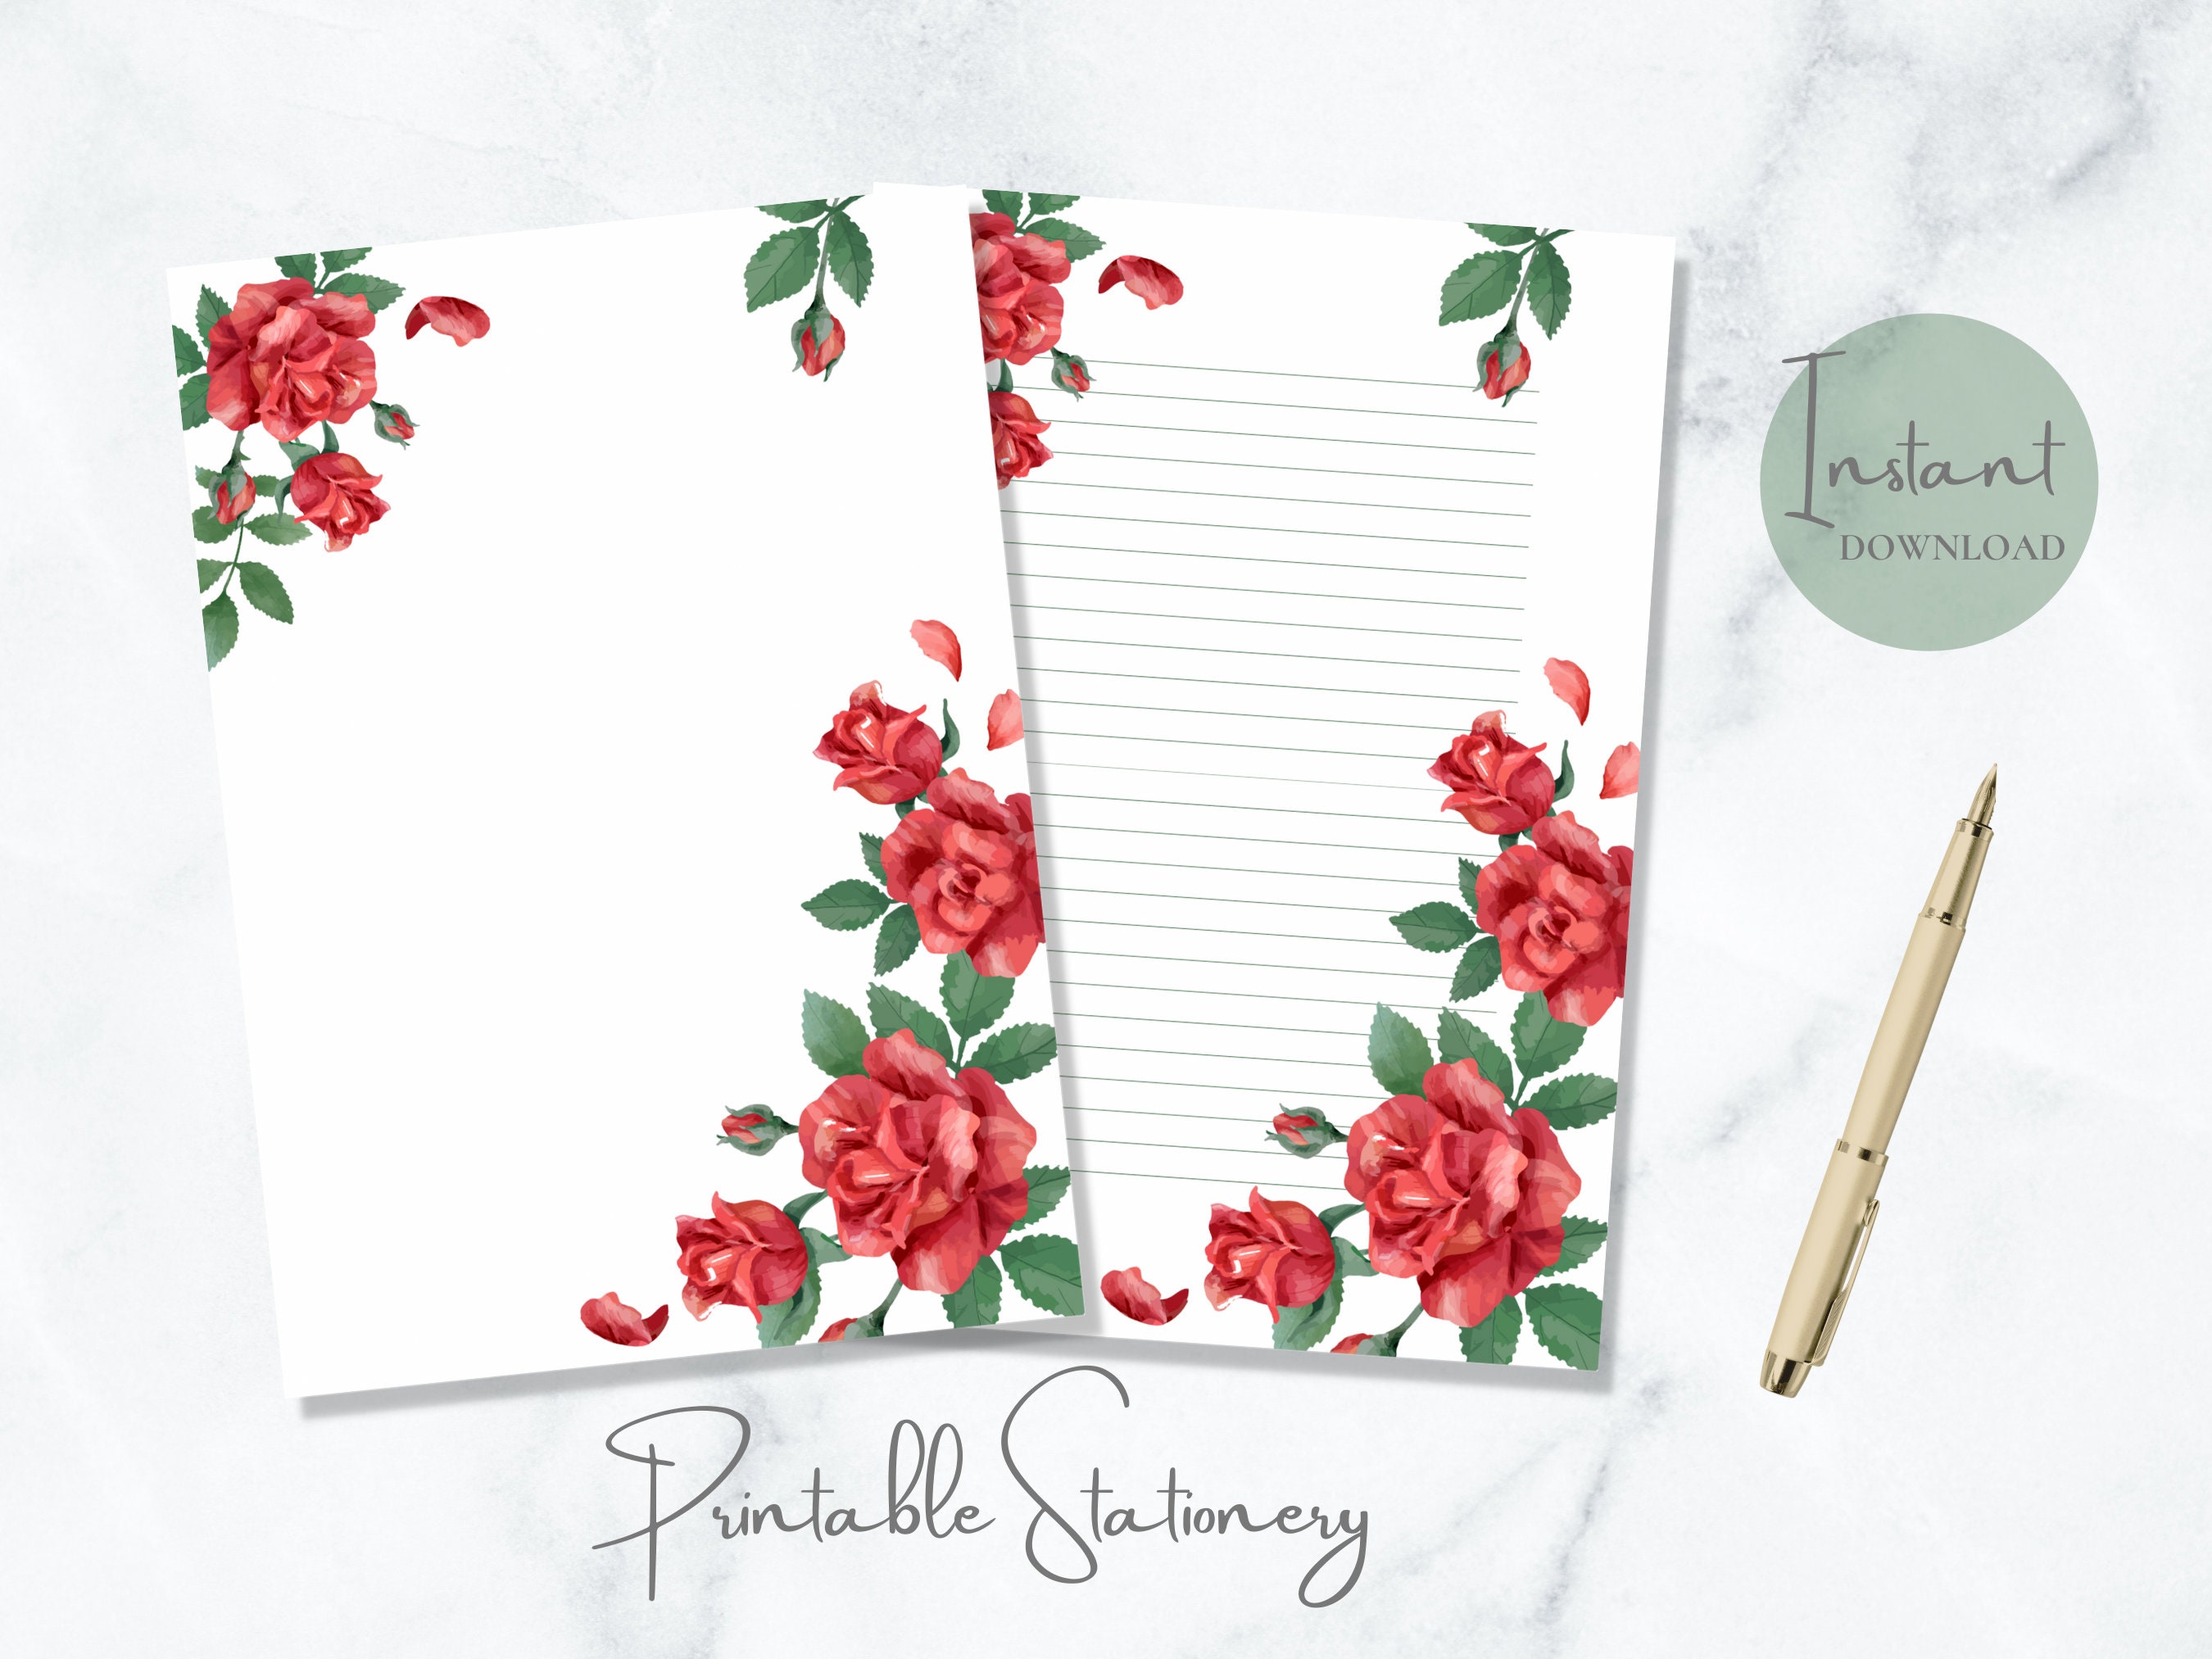 Letter Writing Set,sealing Wax Kit,invitation Envelope,floral